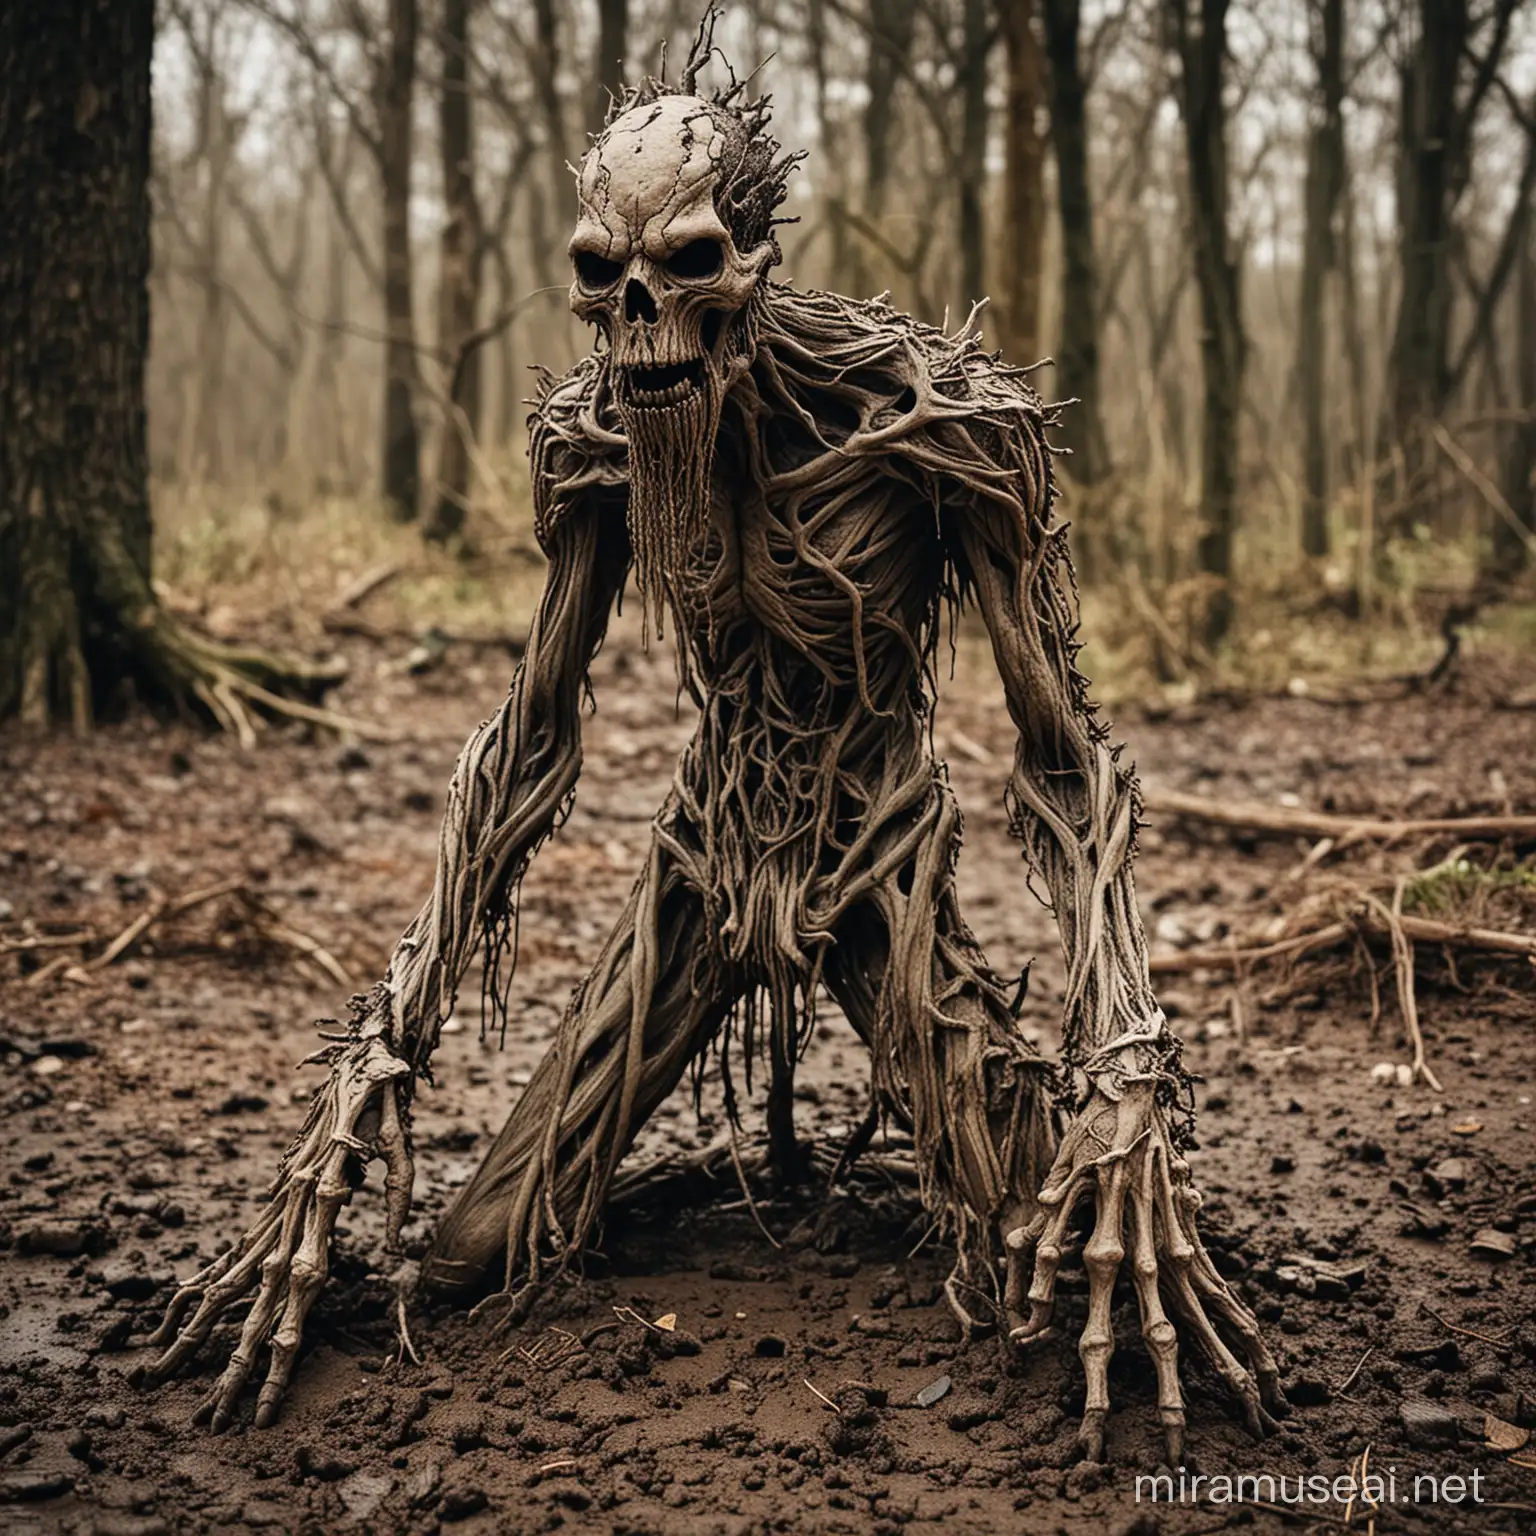 Terrifying Mud Treant Undead Tree Creature with Exposed Bones